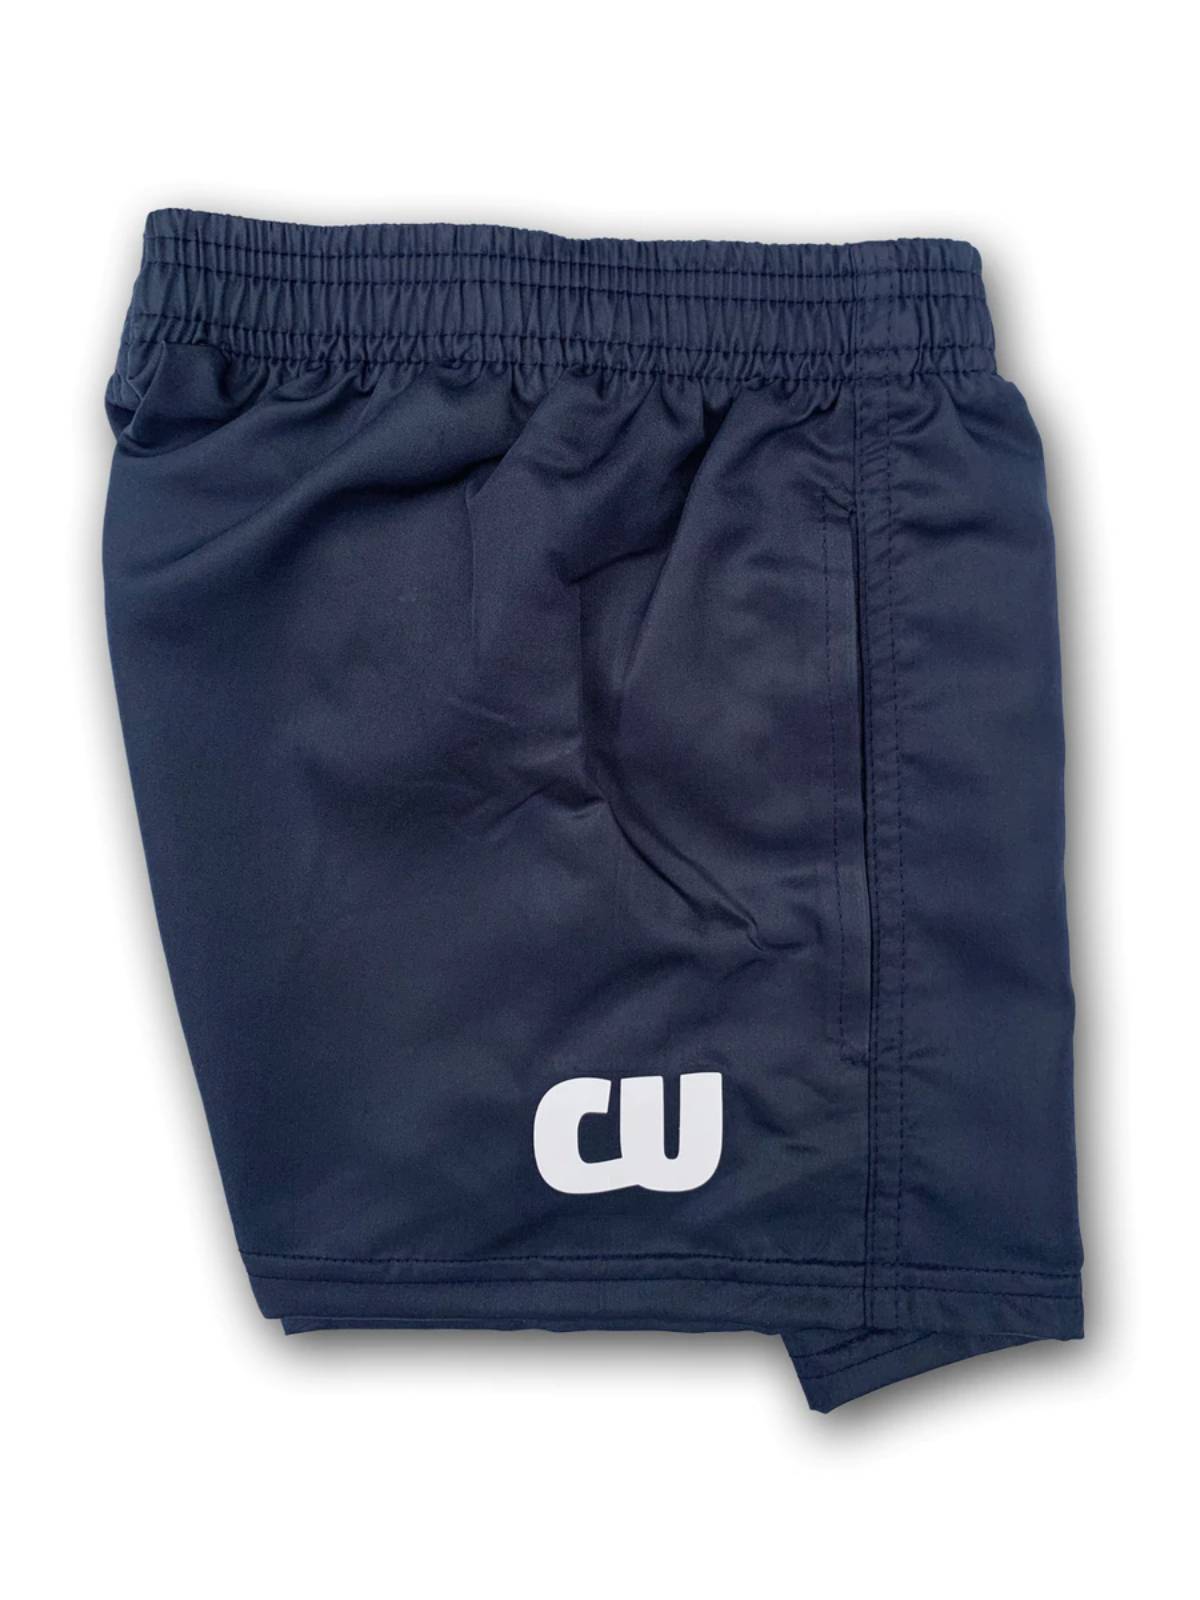 CURB 90s Shorts | Navy